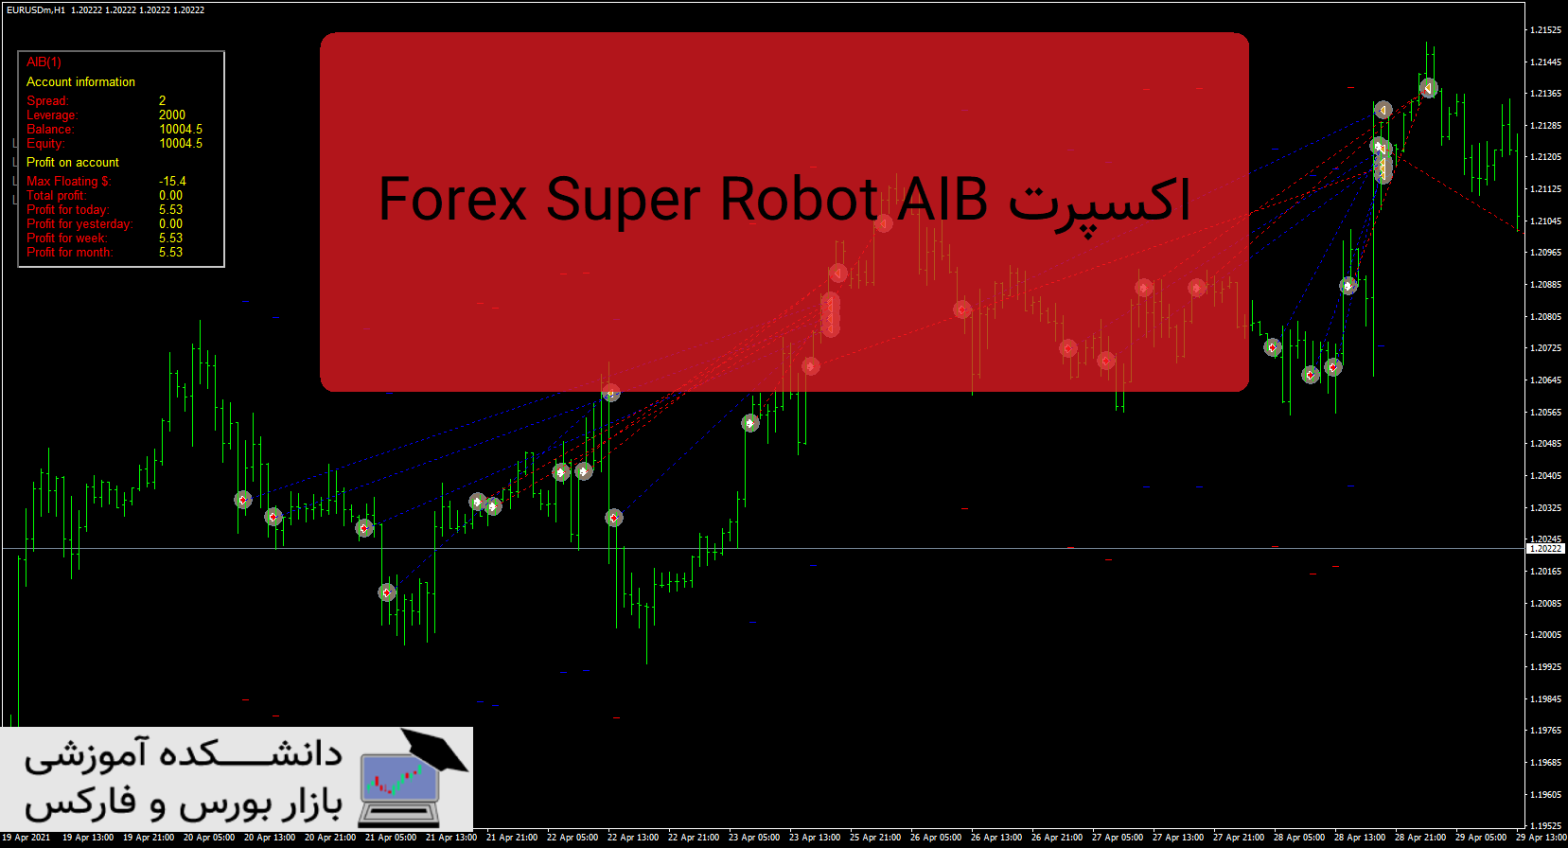 Forex Super Robot AIB دانلود و معرفی اکسپرت